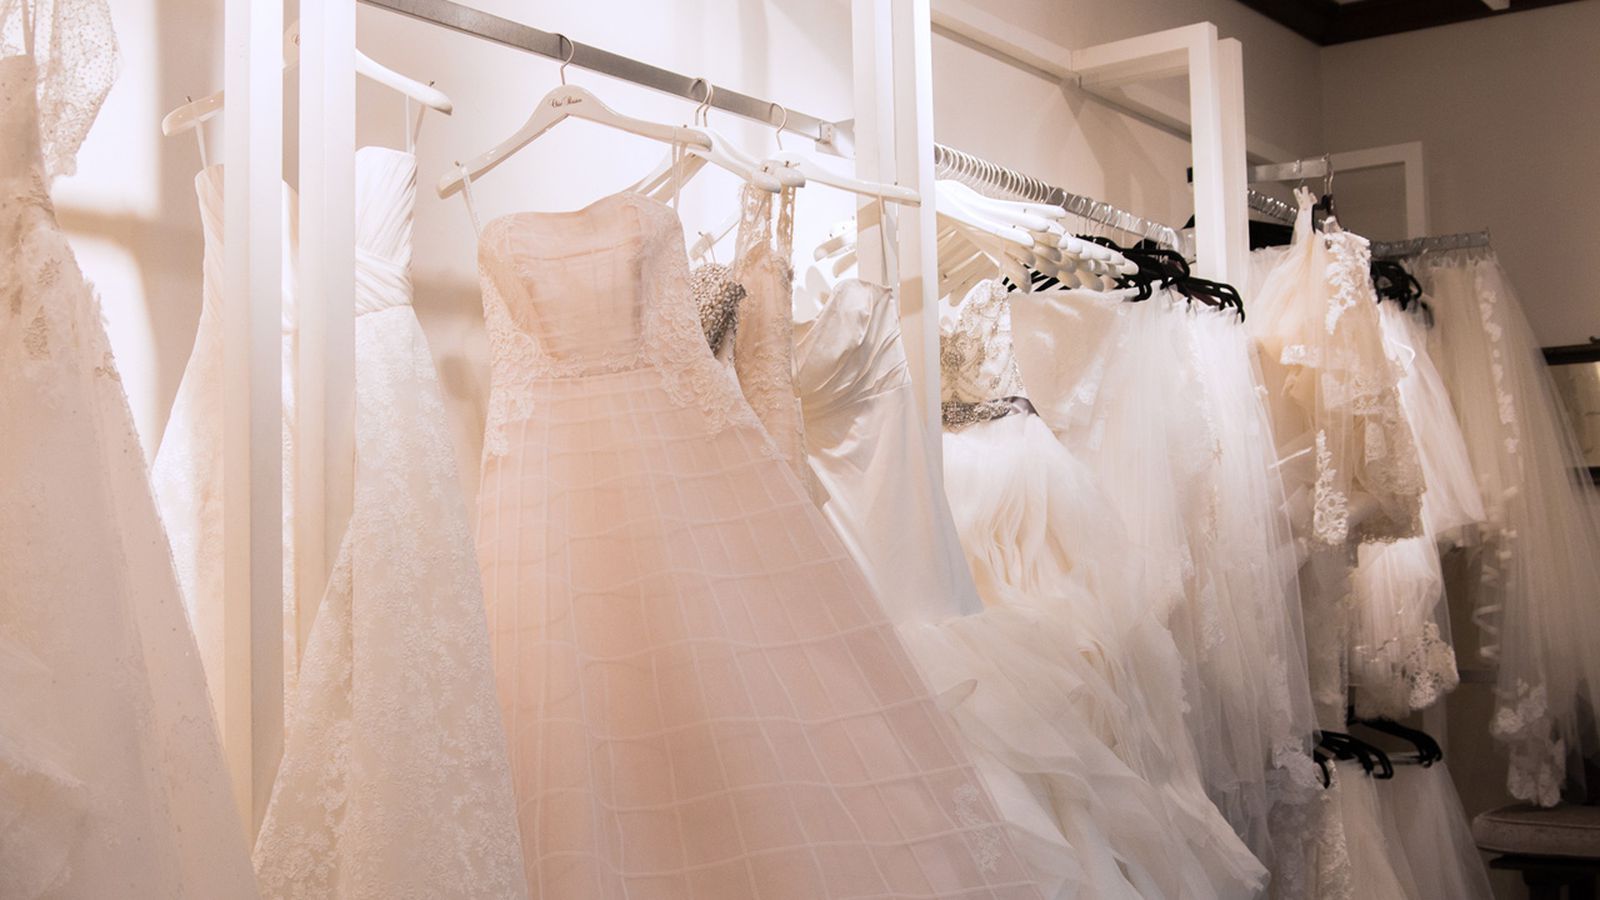 How Long Do Wedding Dress Alterations Take? - Zola Expert Wedding Advice